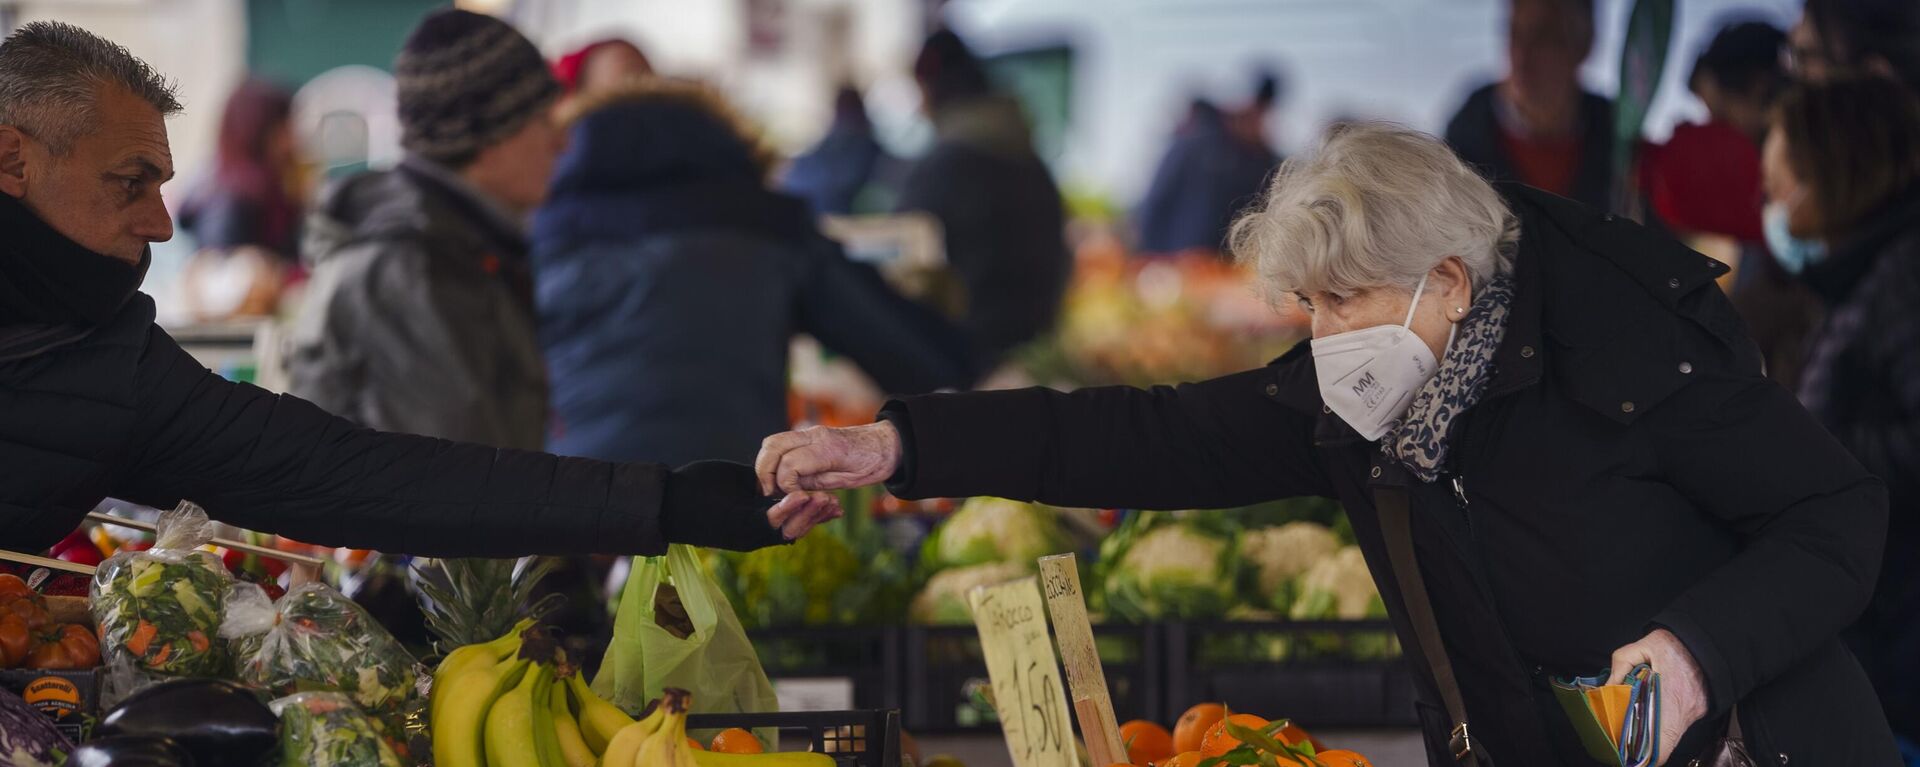 An elderly woman buys food in a market in Florence, Italy, Thursday, Feb. 17, 2022 - Sputnik International, 1920, 24.11.2022